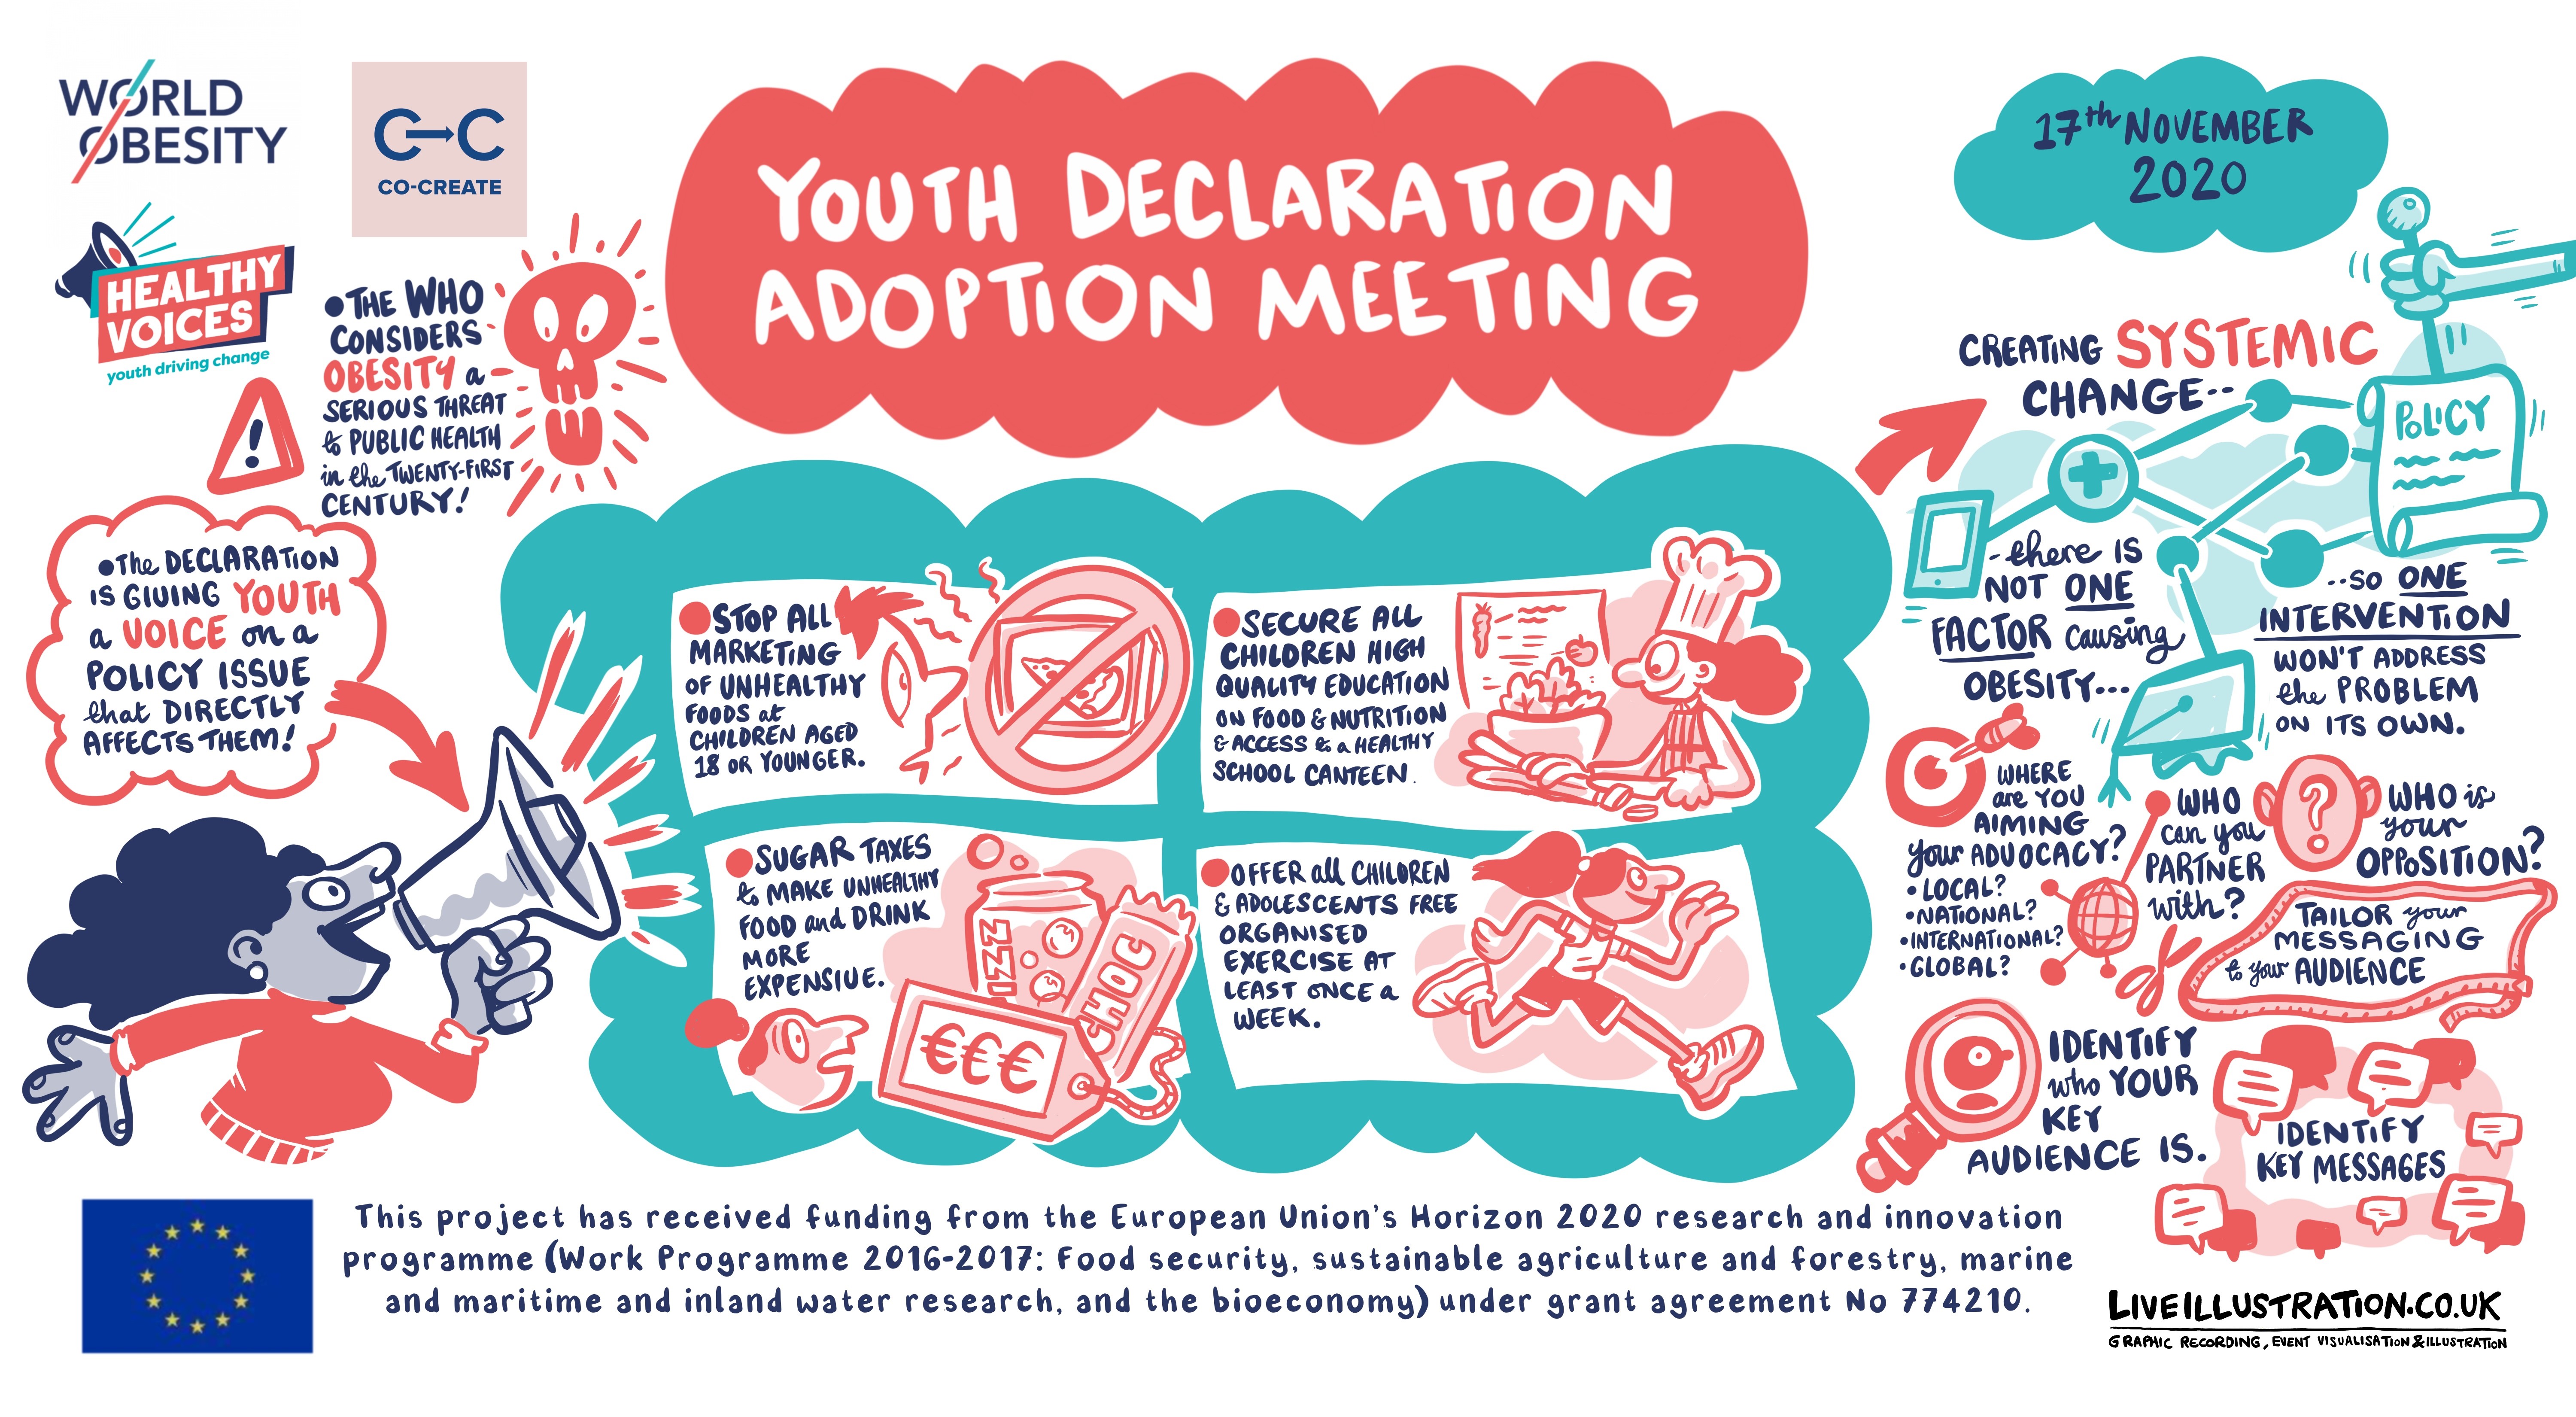 CO-CREATE_Youth Declaration Adoption Meeting Nov 17 2020.jpg